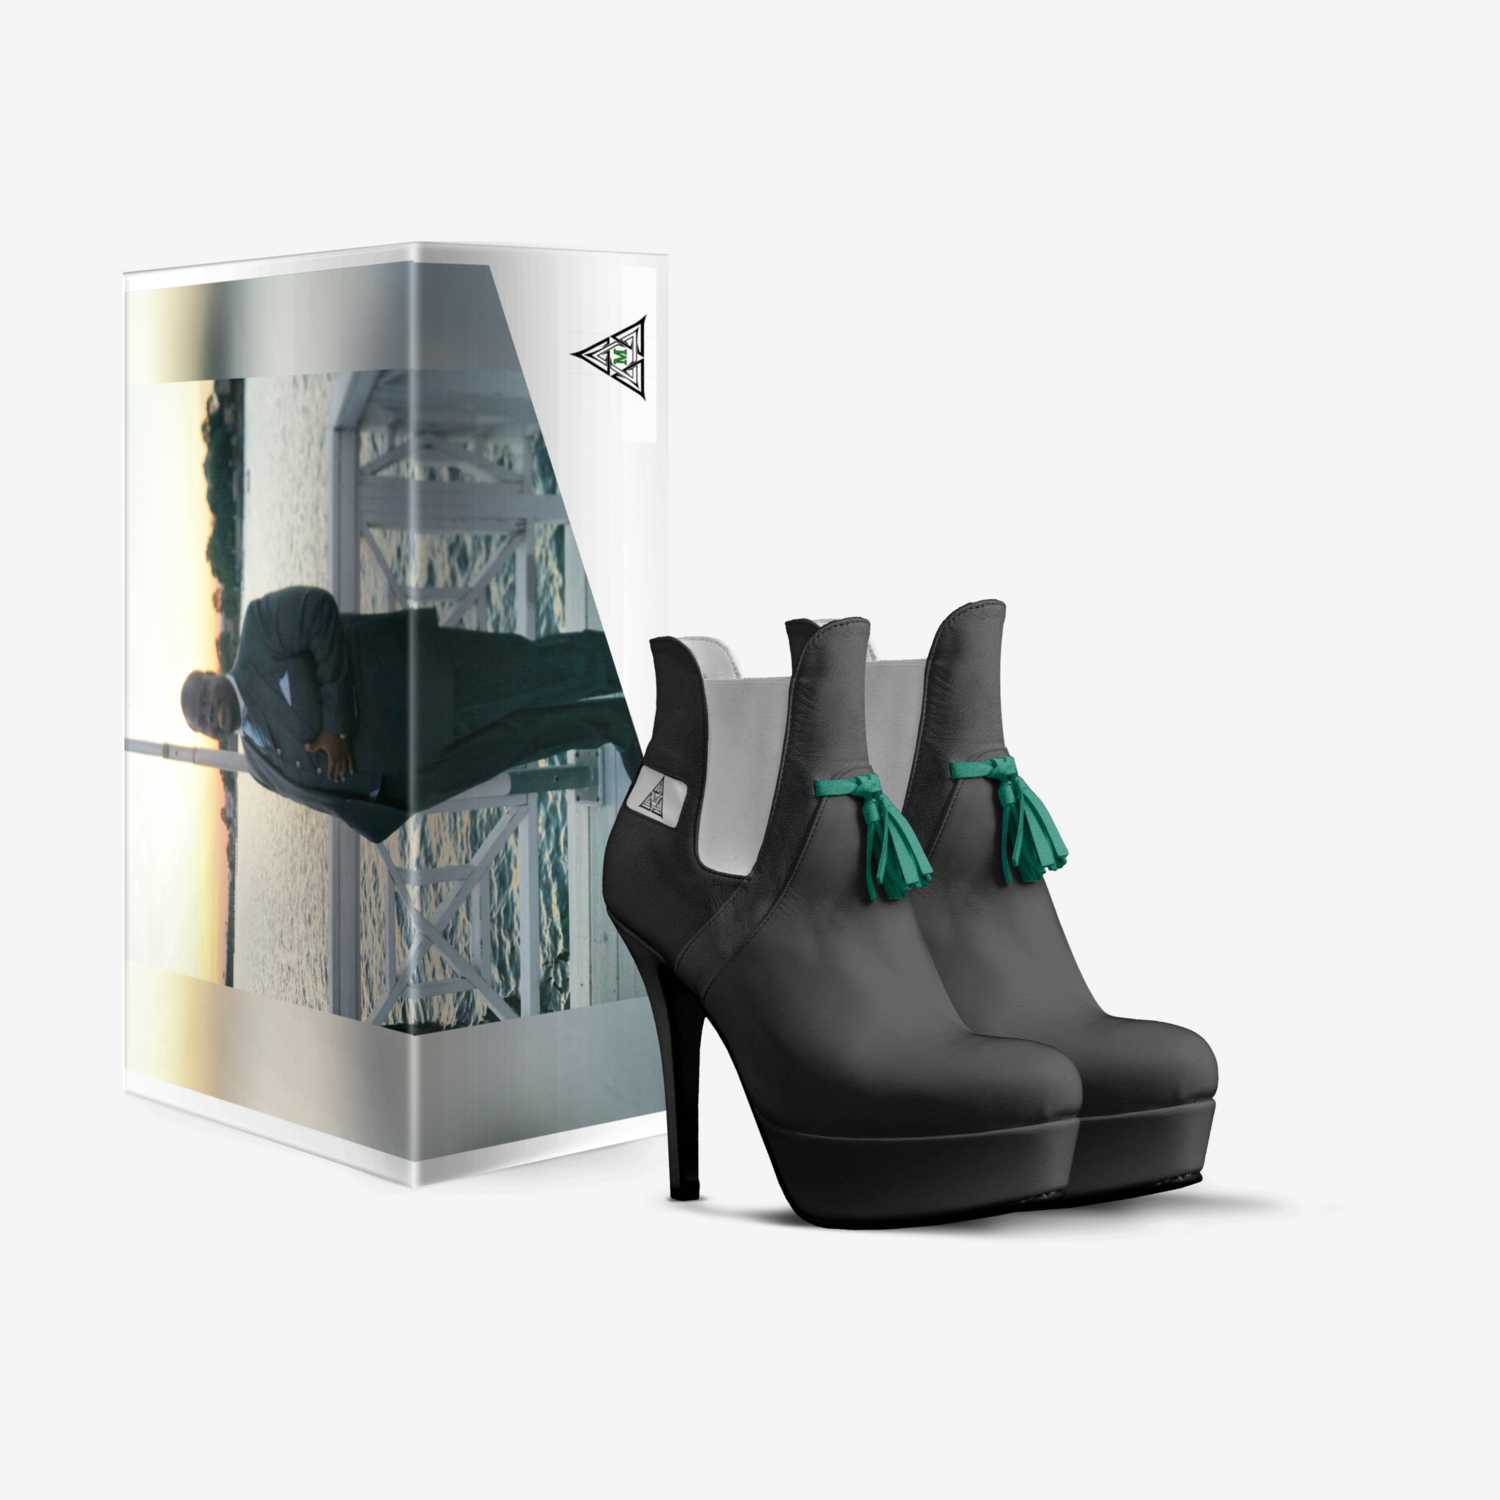 Murphnetti TS custom made in Italy shoes by Tyriek Murphy | Box view